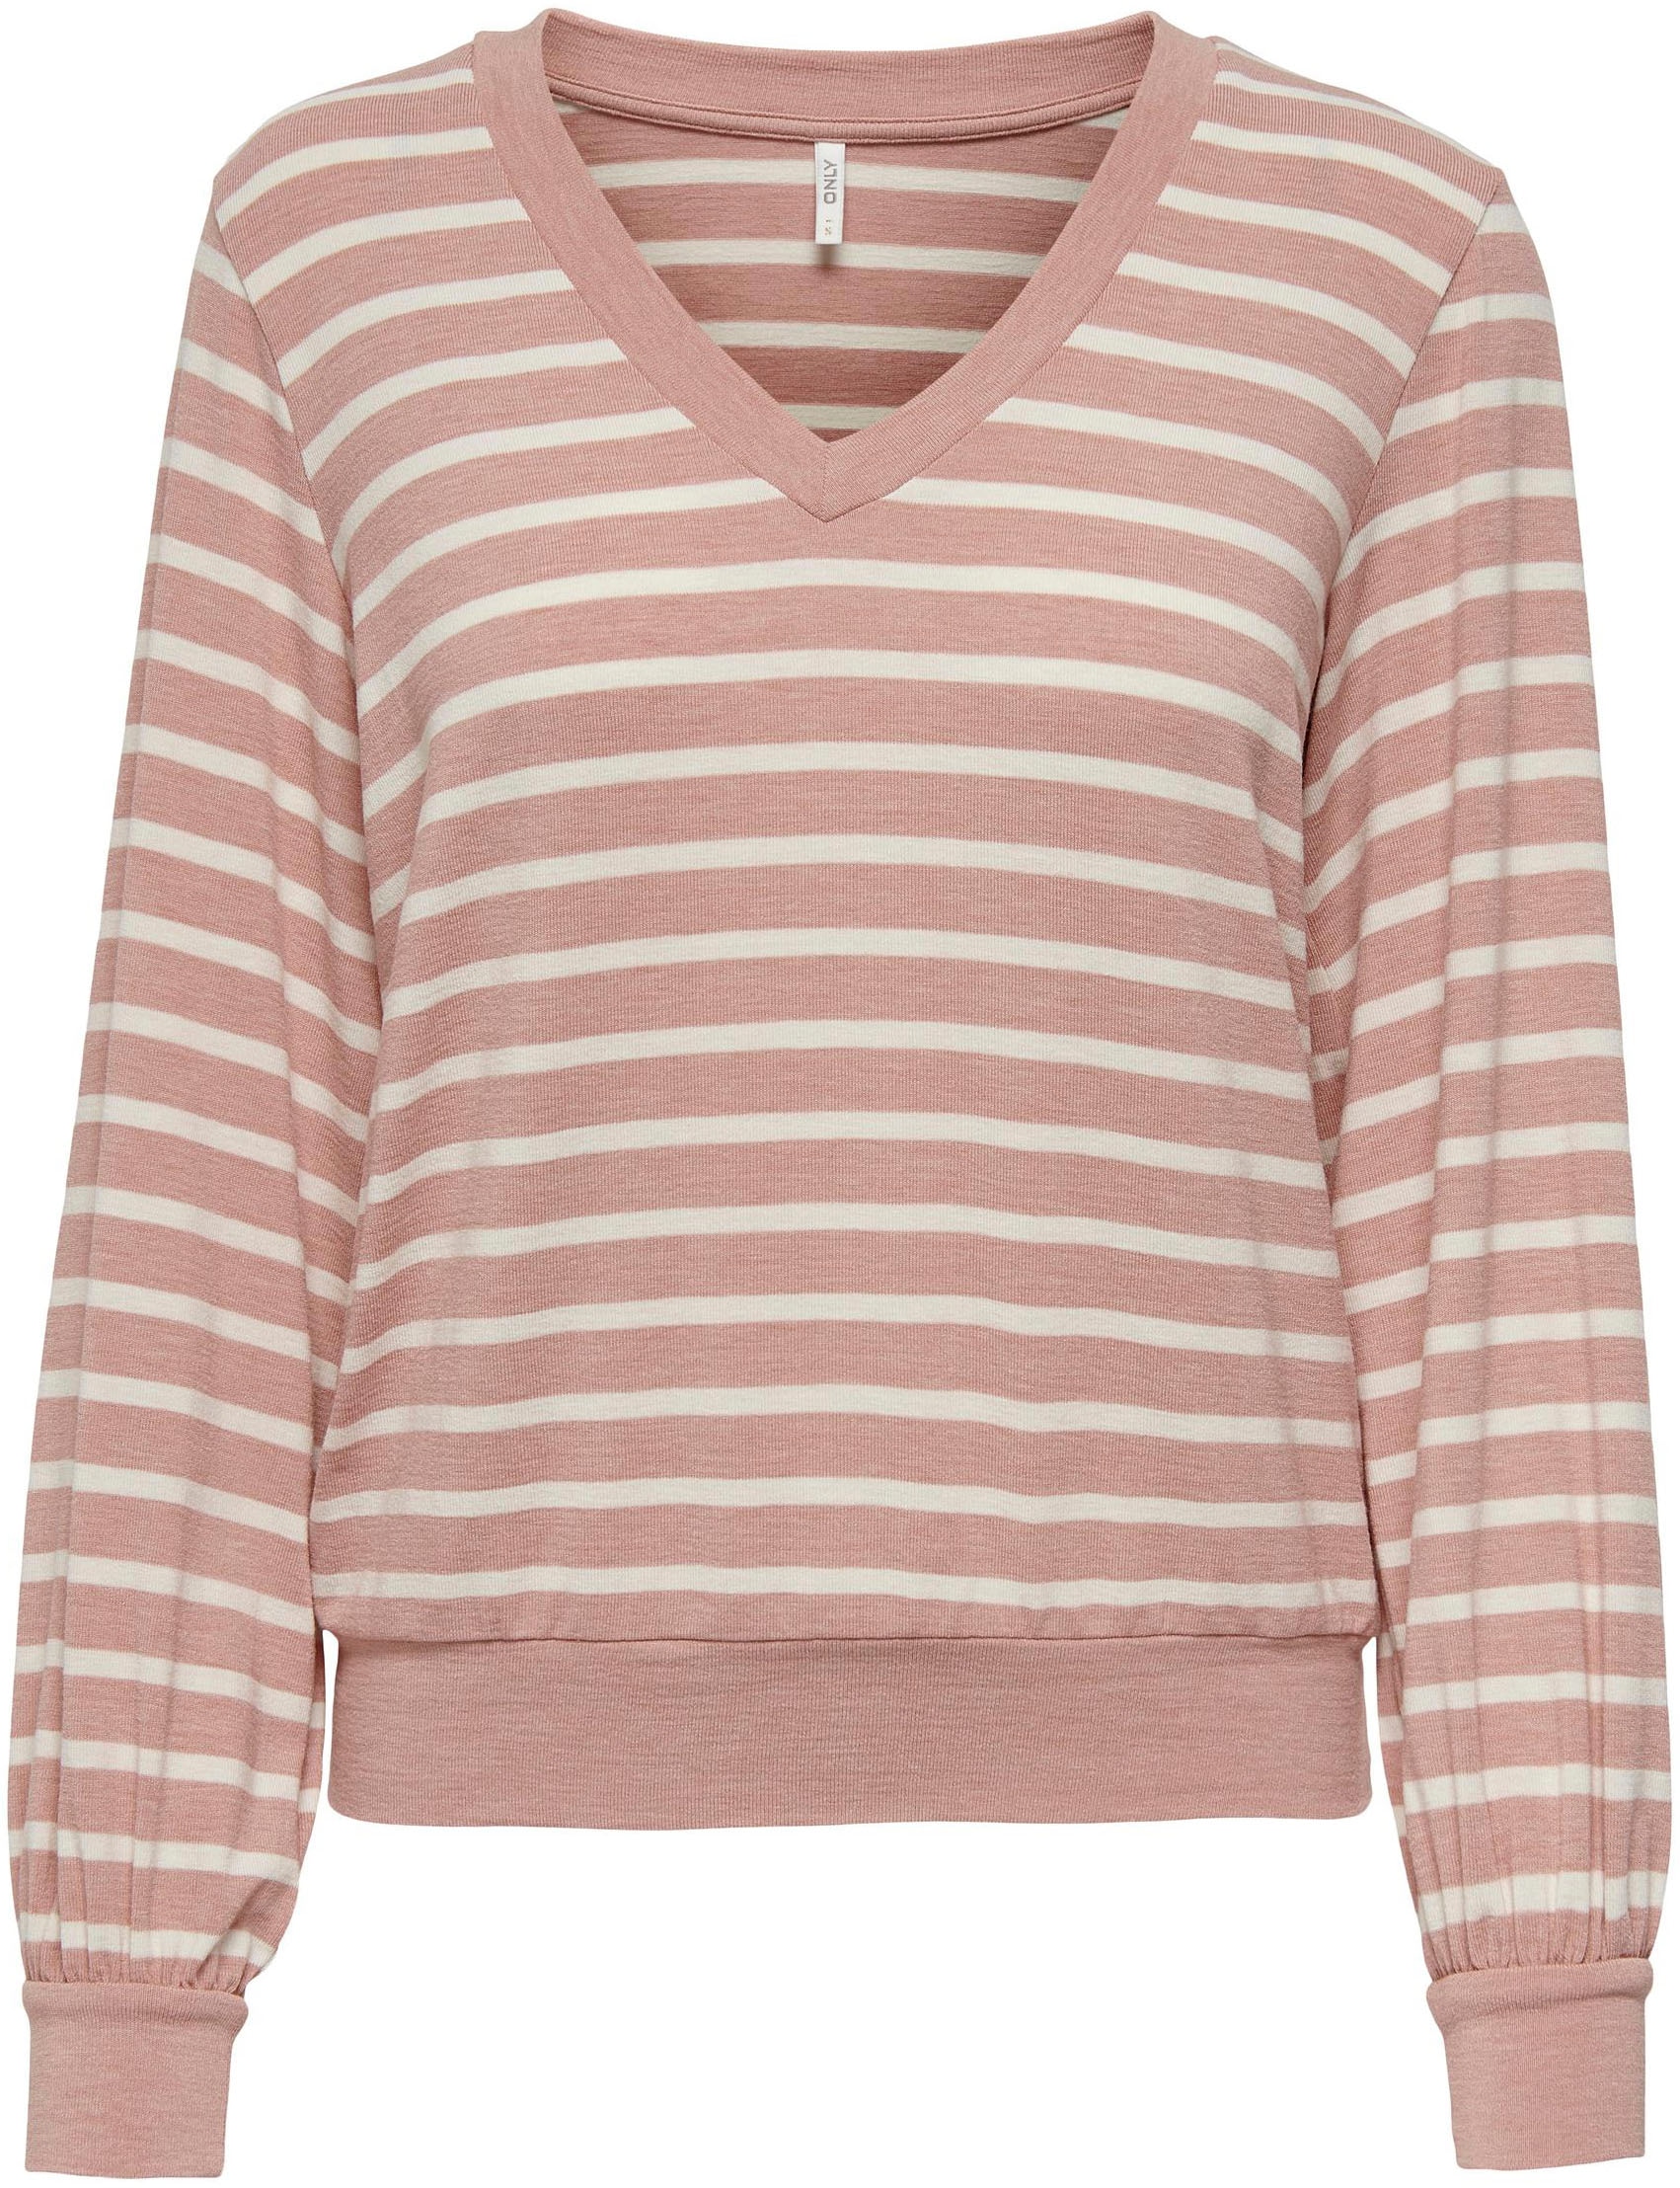 Calvin Klein Plus Size Logo-Stripe Hoodie - Macy's